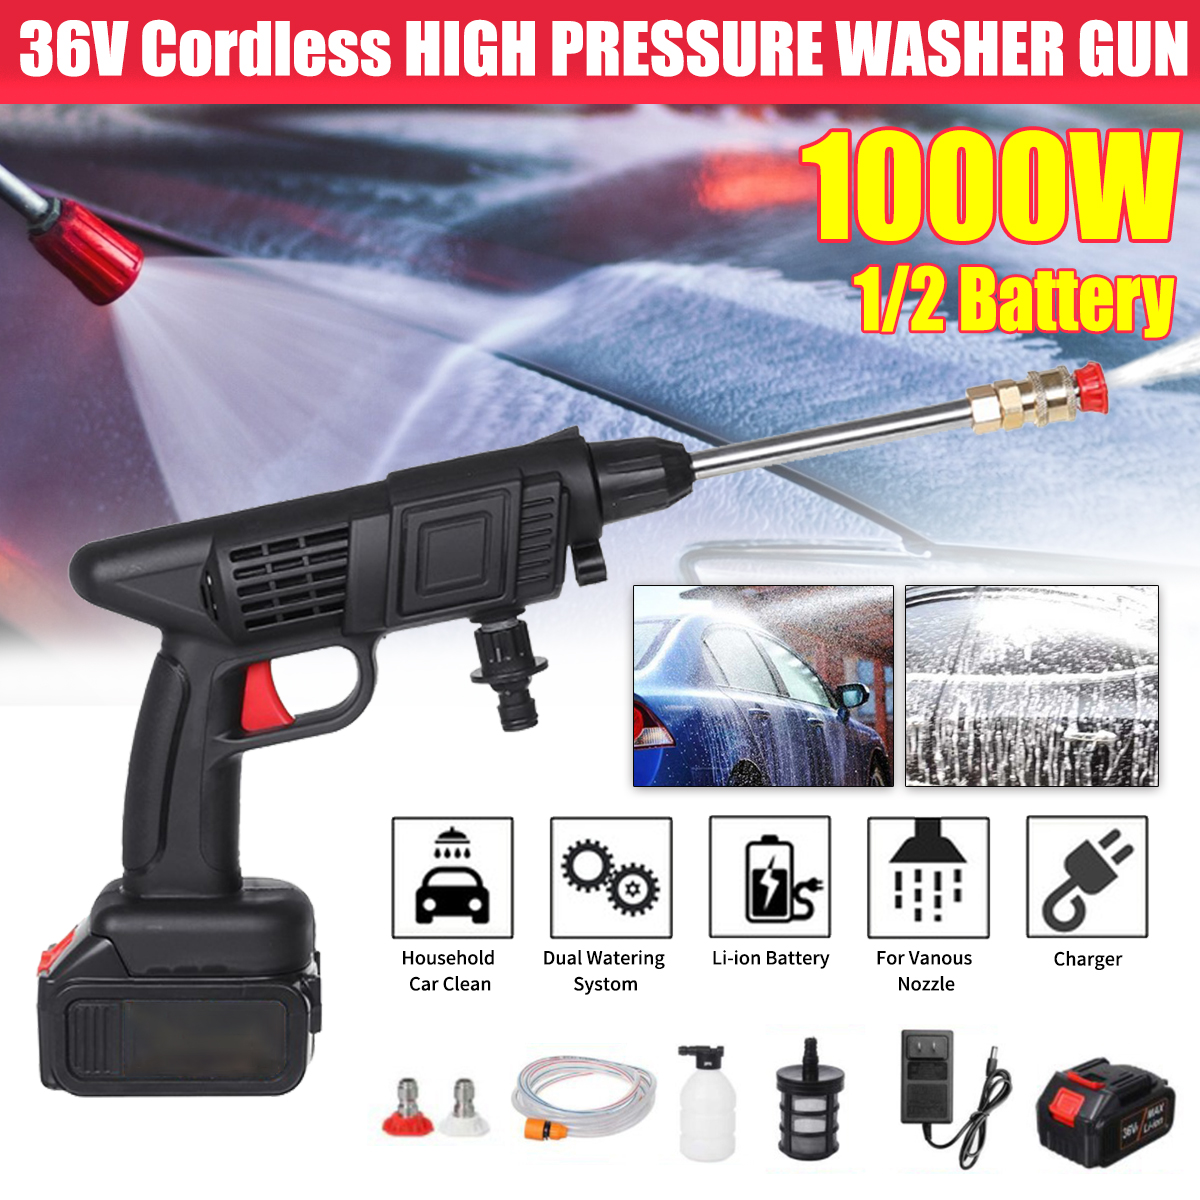 36V-1000W-Wireless-High-Pressure-Washer-Car-Washing-Machine-Water-Wash-Spray-Guns-W-None12-Battery-1866606-1